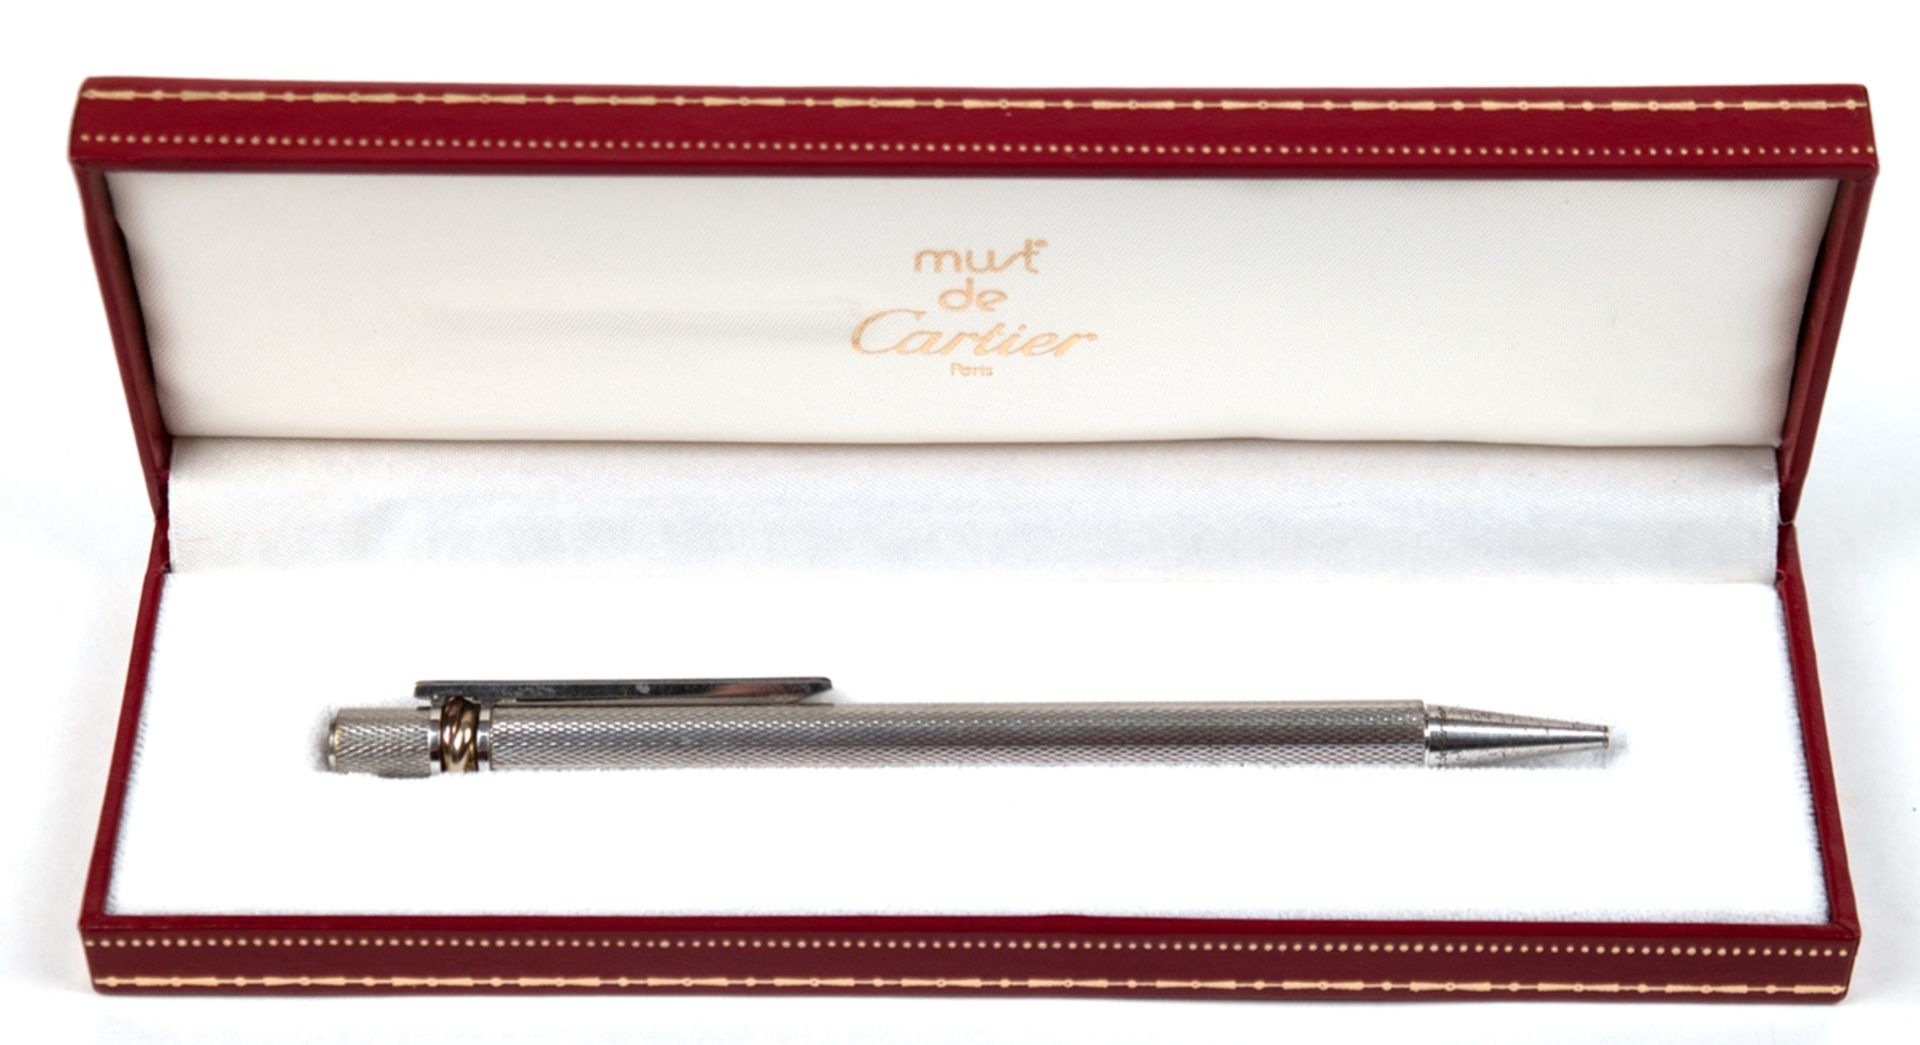 Kugelschreiber von Cartier, sog. "Must de Cartier", silberfarben, teilw. farbig emailliert, Korpus 